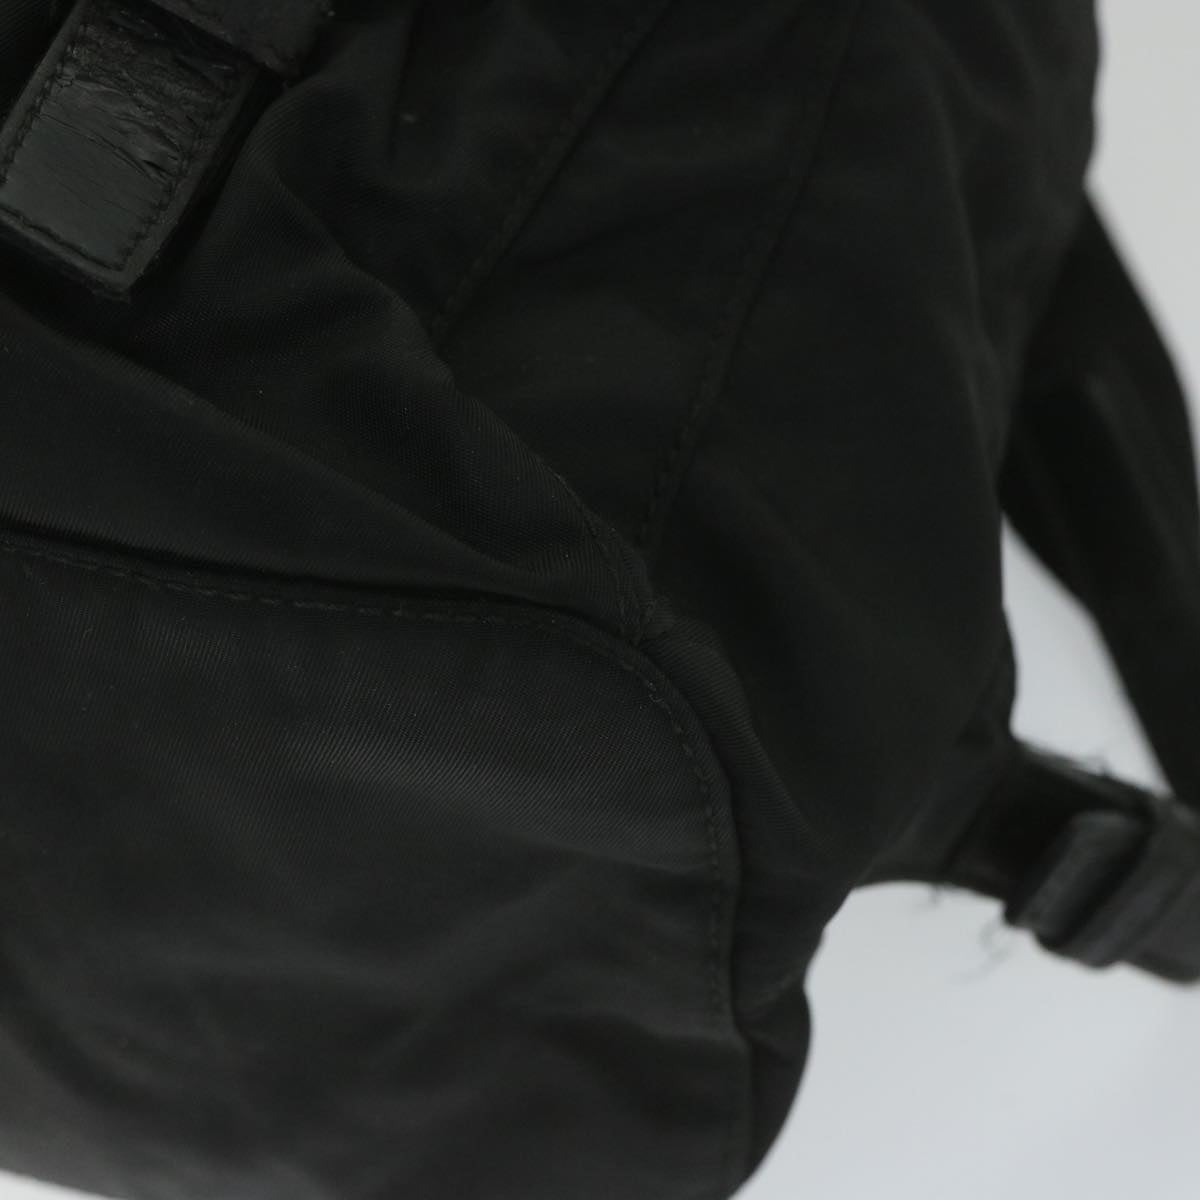 PRADA Backpack Nylon Black Auth fm2763